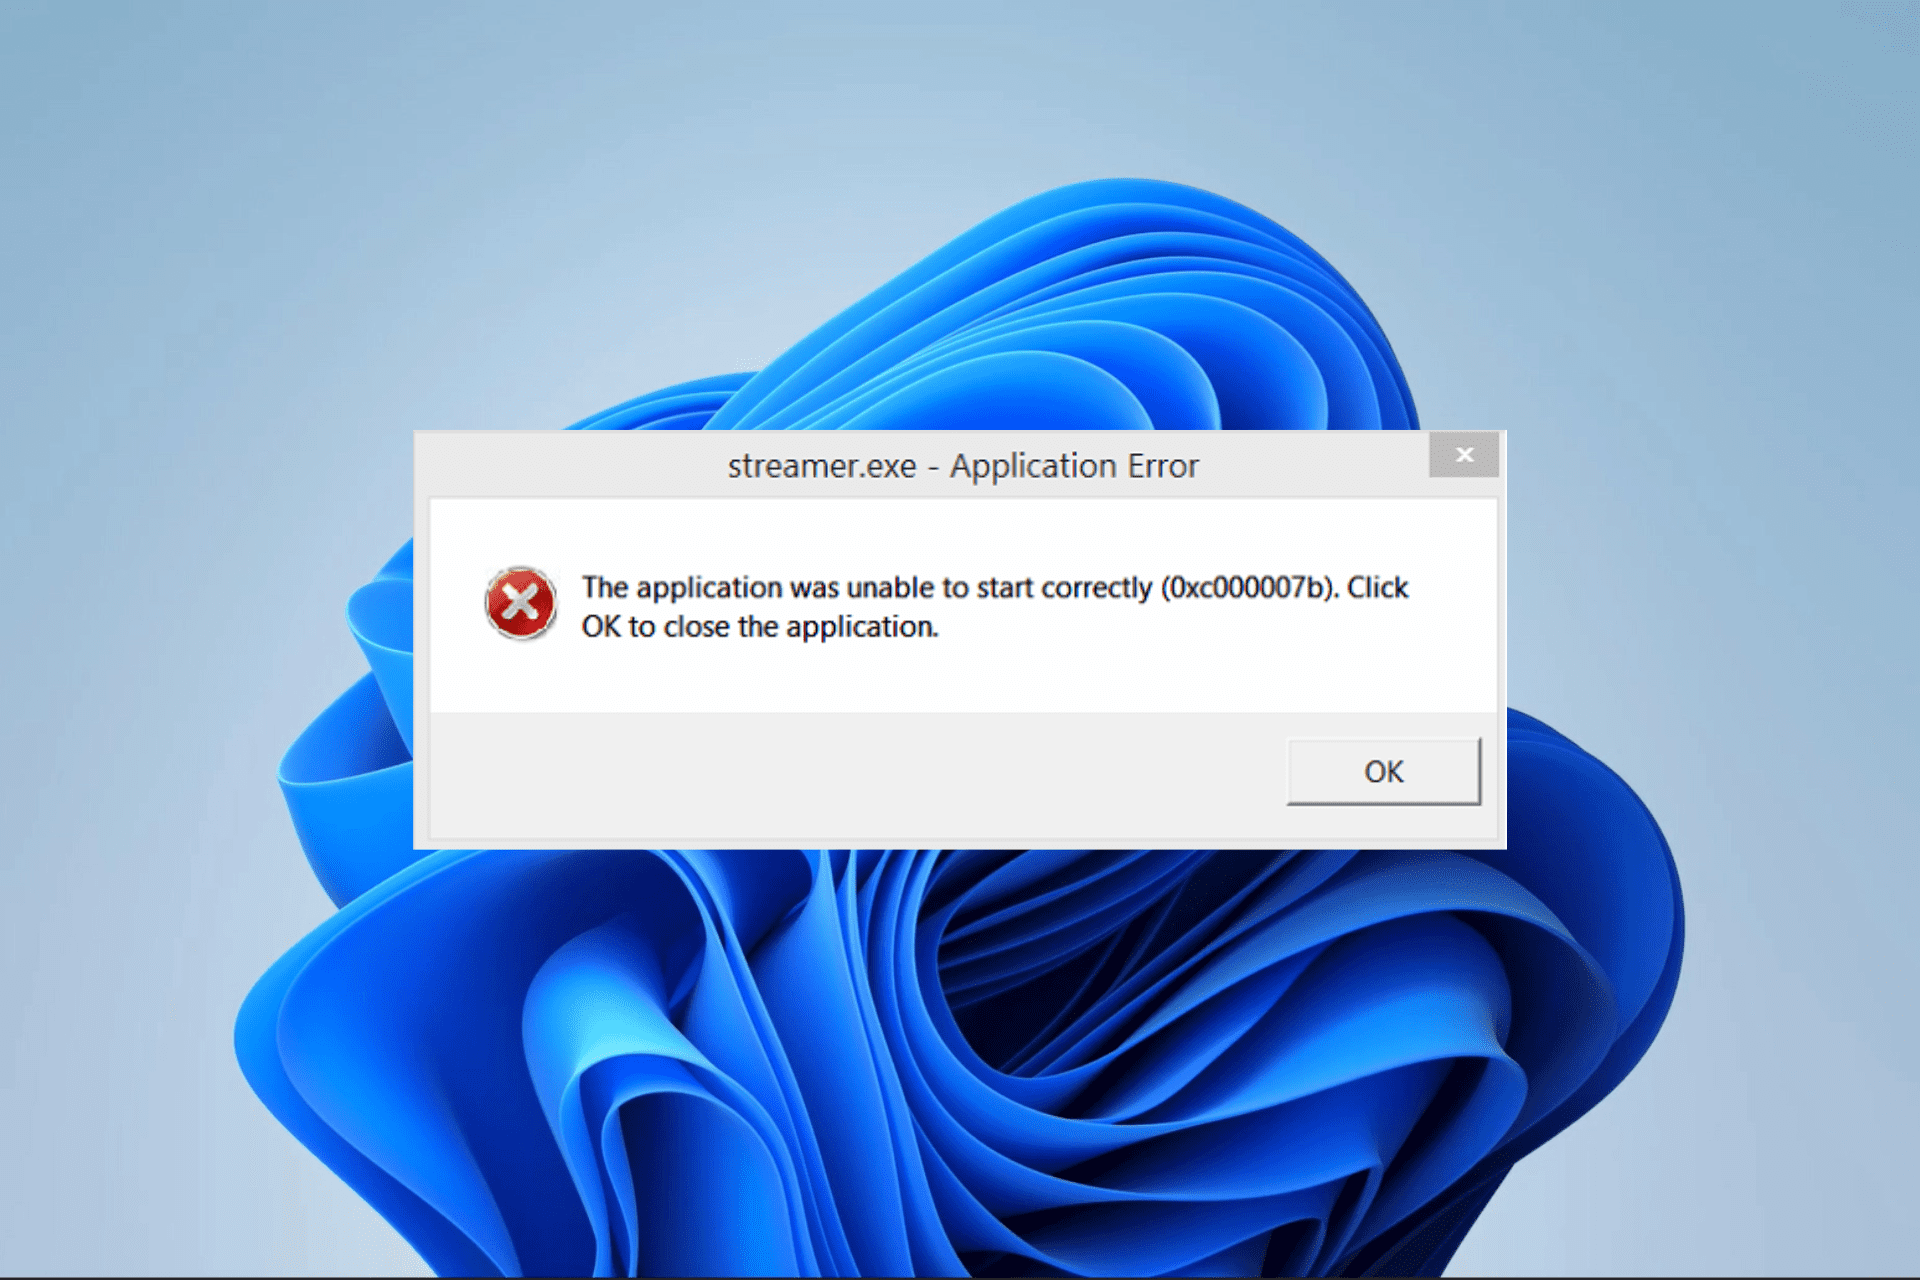 Fix Application Error 0xC00007b in Windows 11